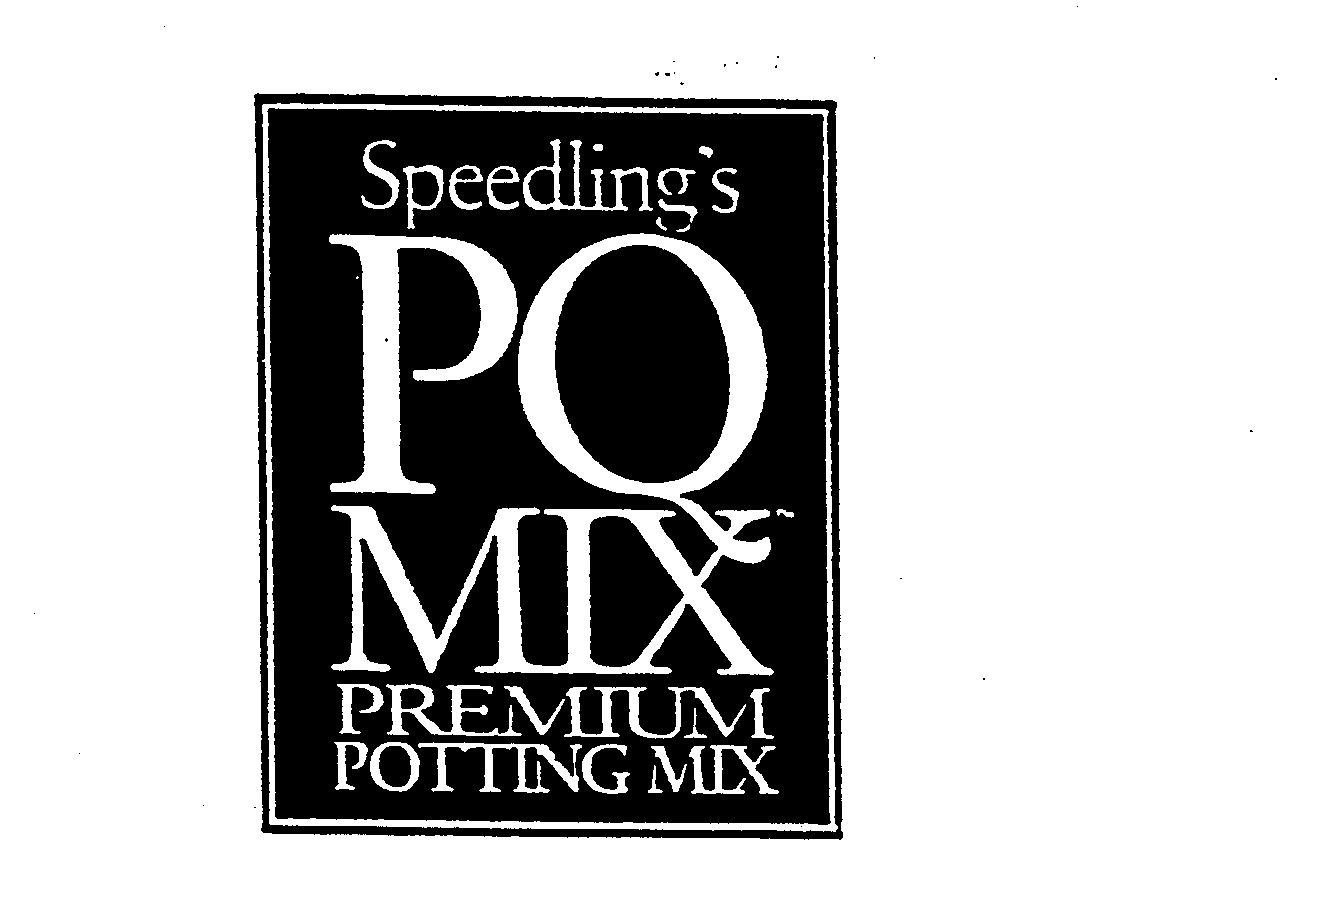  SPEEDLING'S PQ MIX PREMIUM POTTING MIX